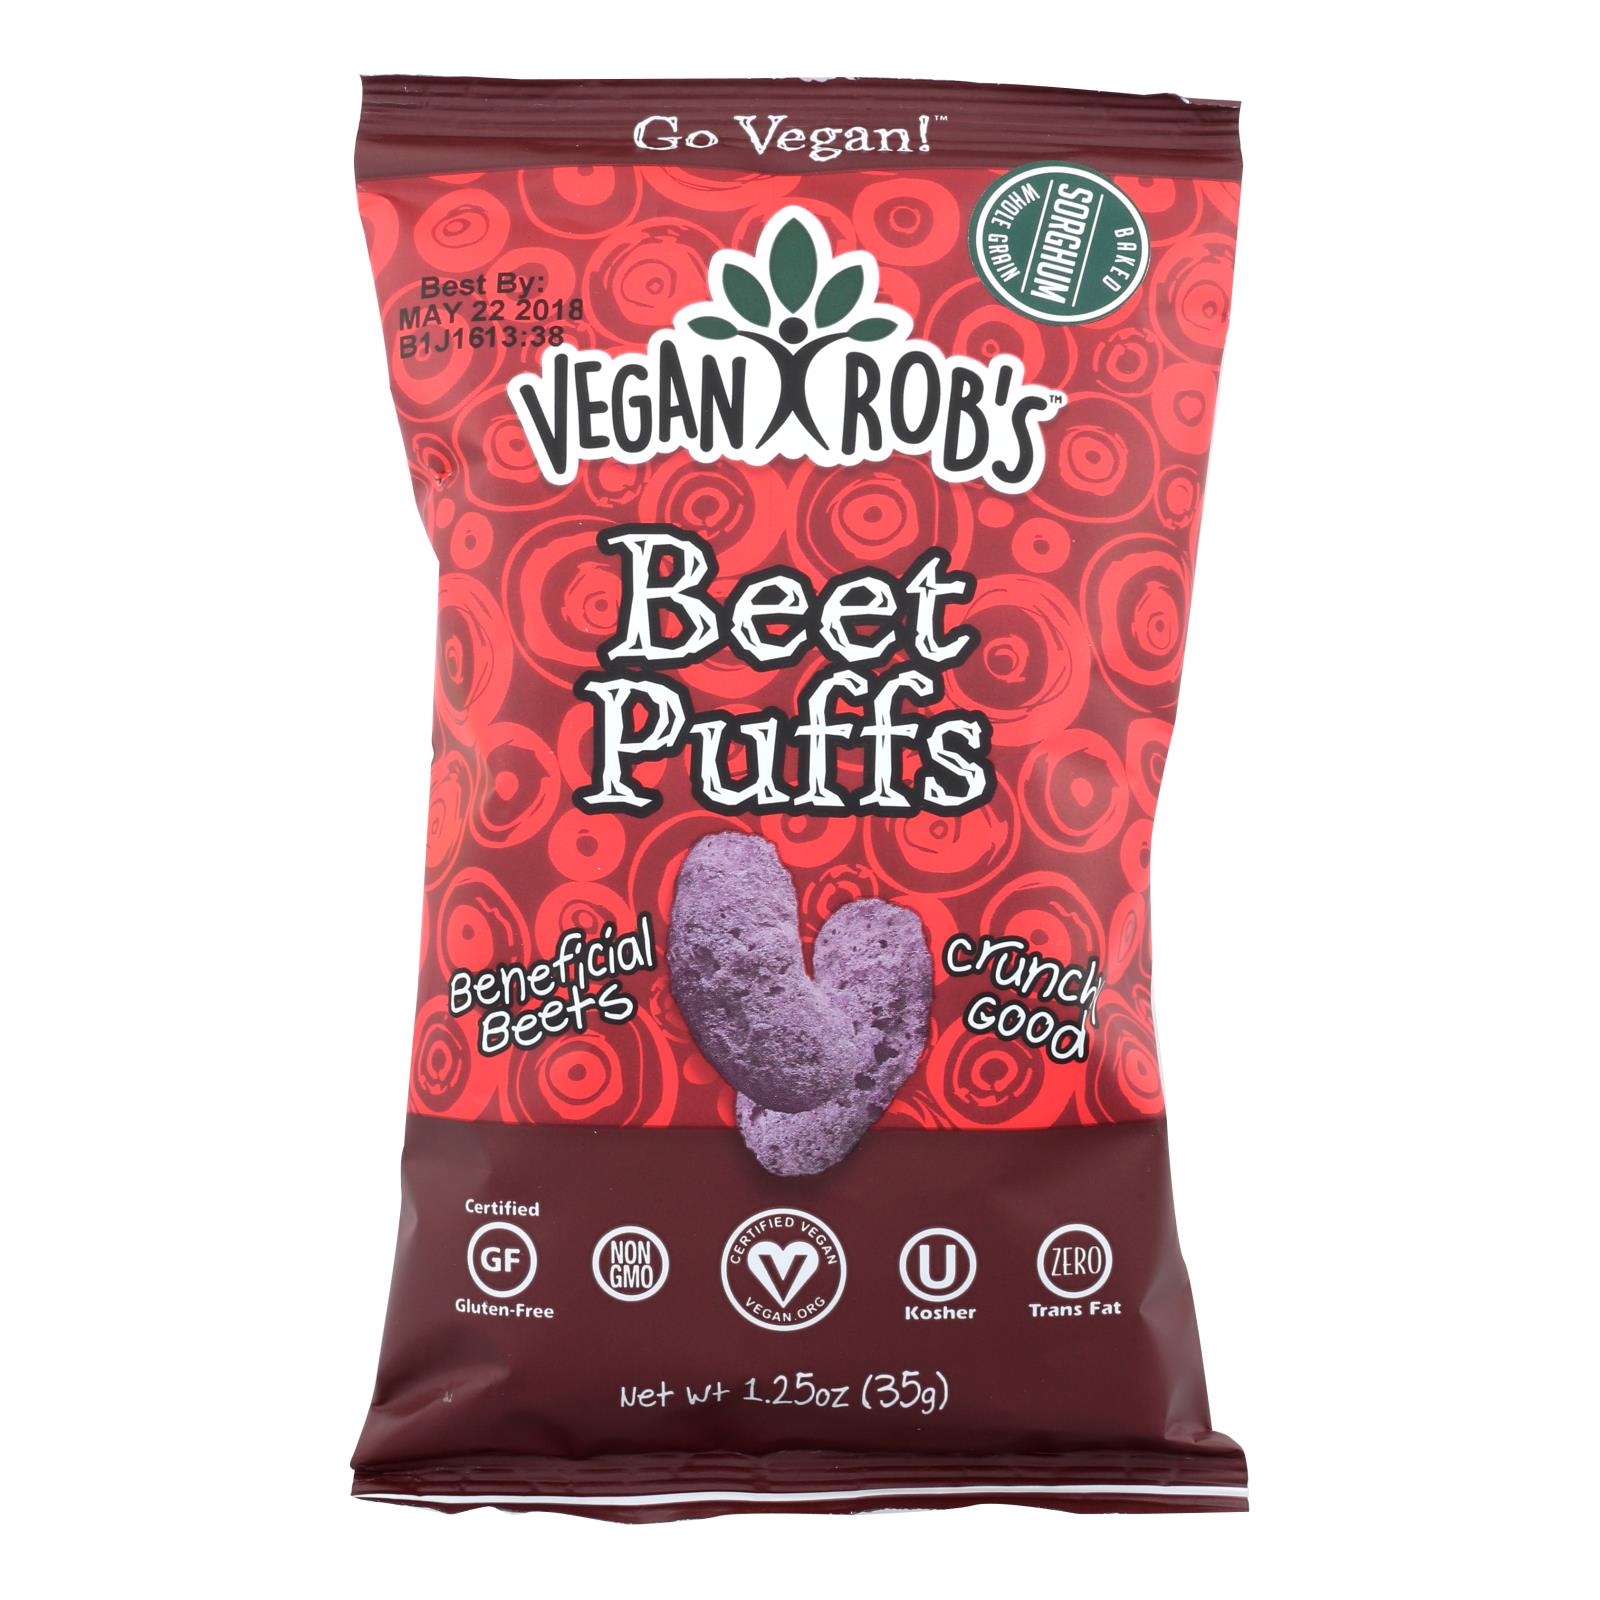 Vegan Rob's Beet Puffs - 24개 묶음상품 - 1.25 OZ